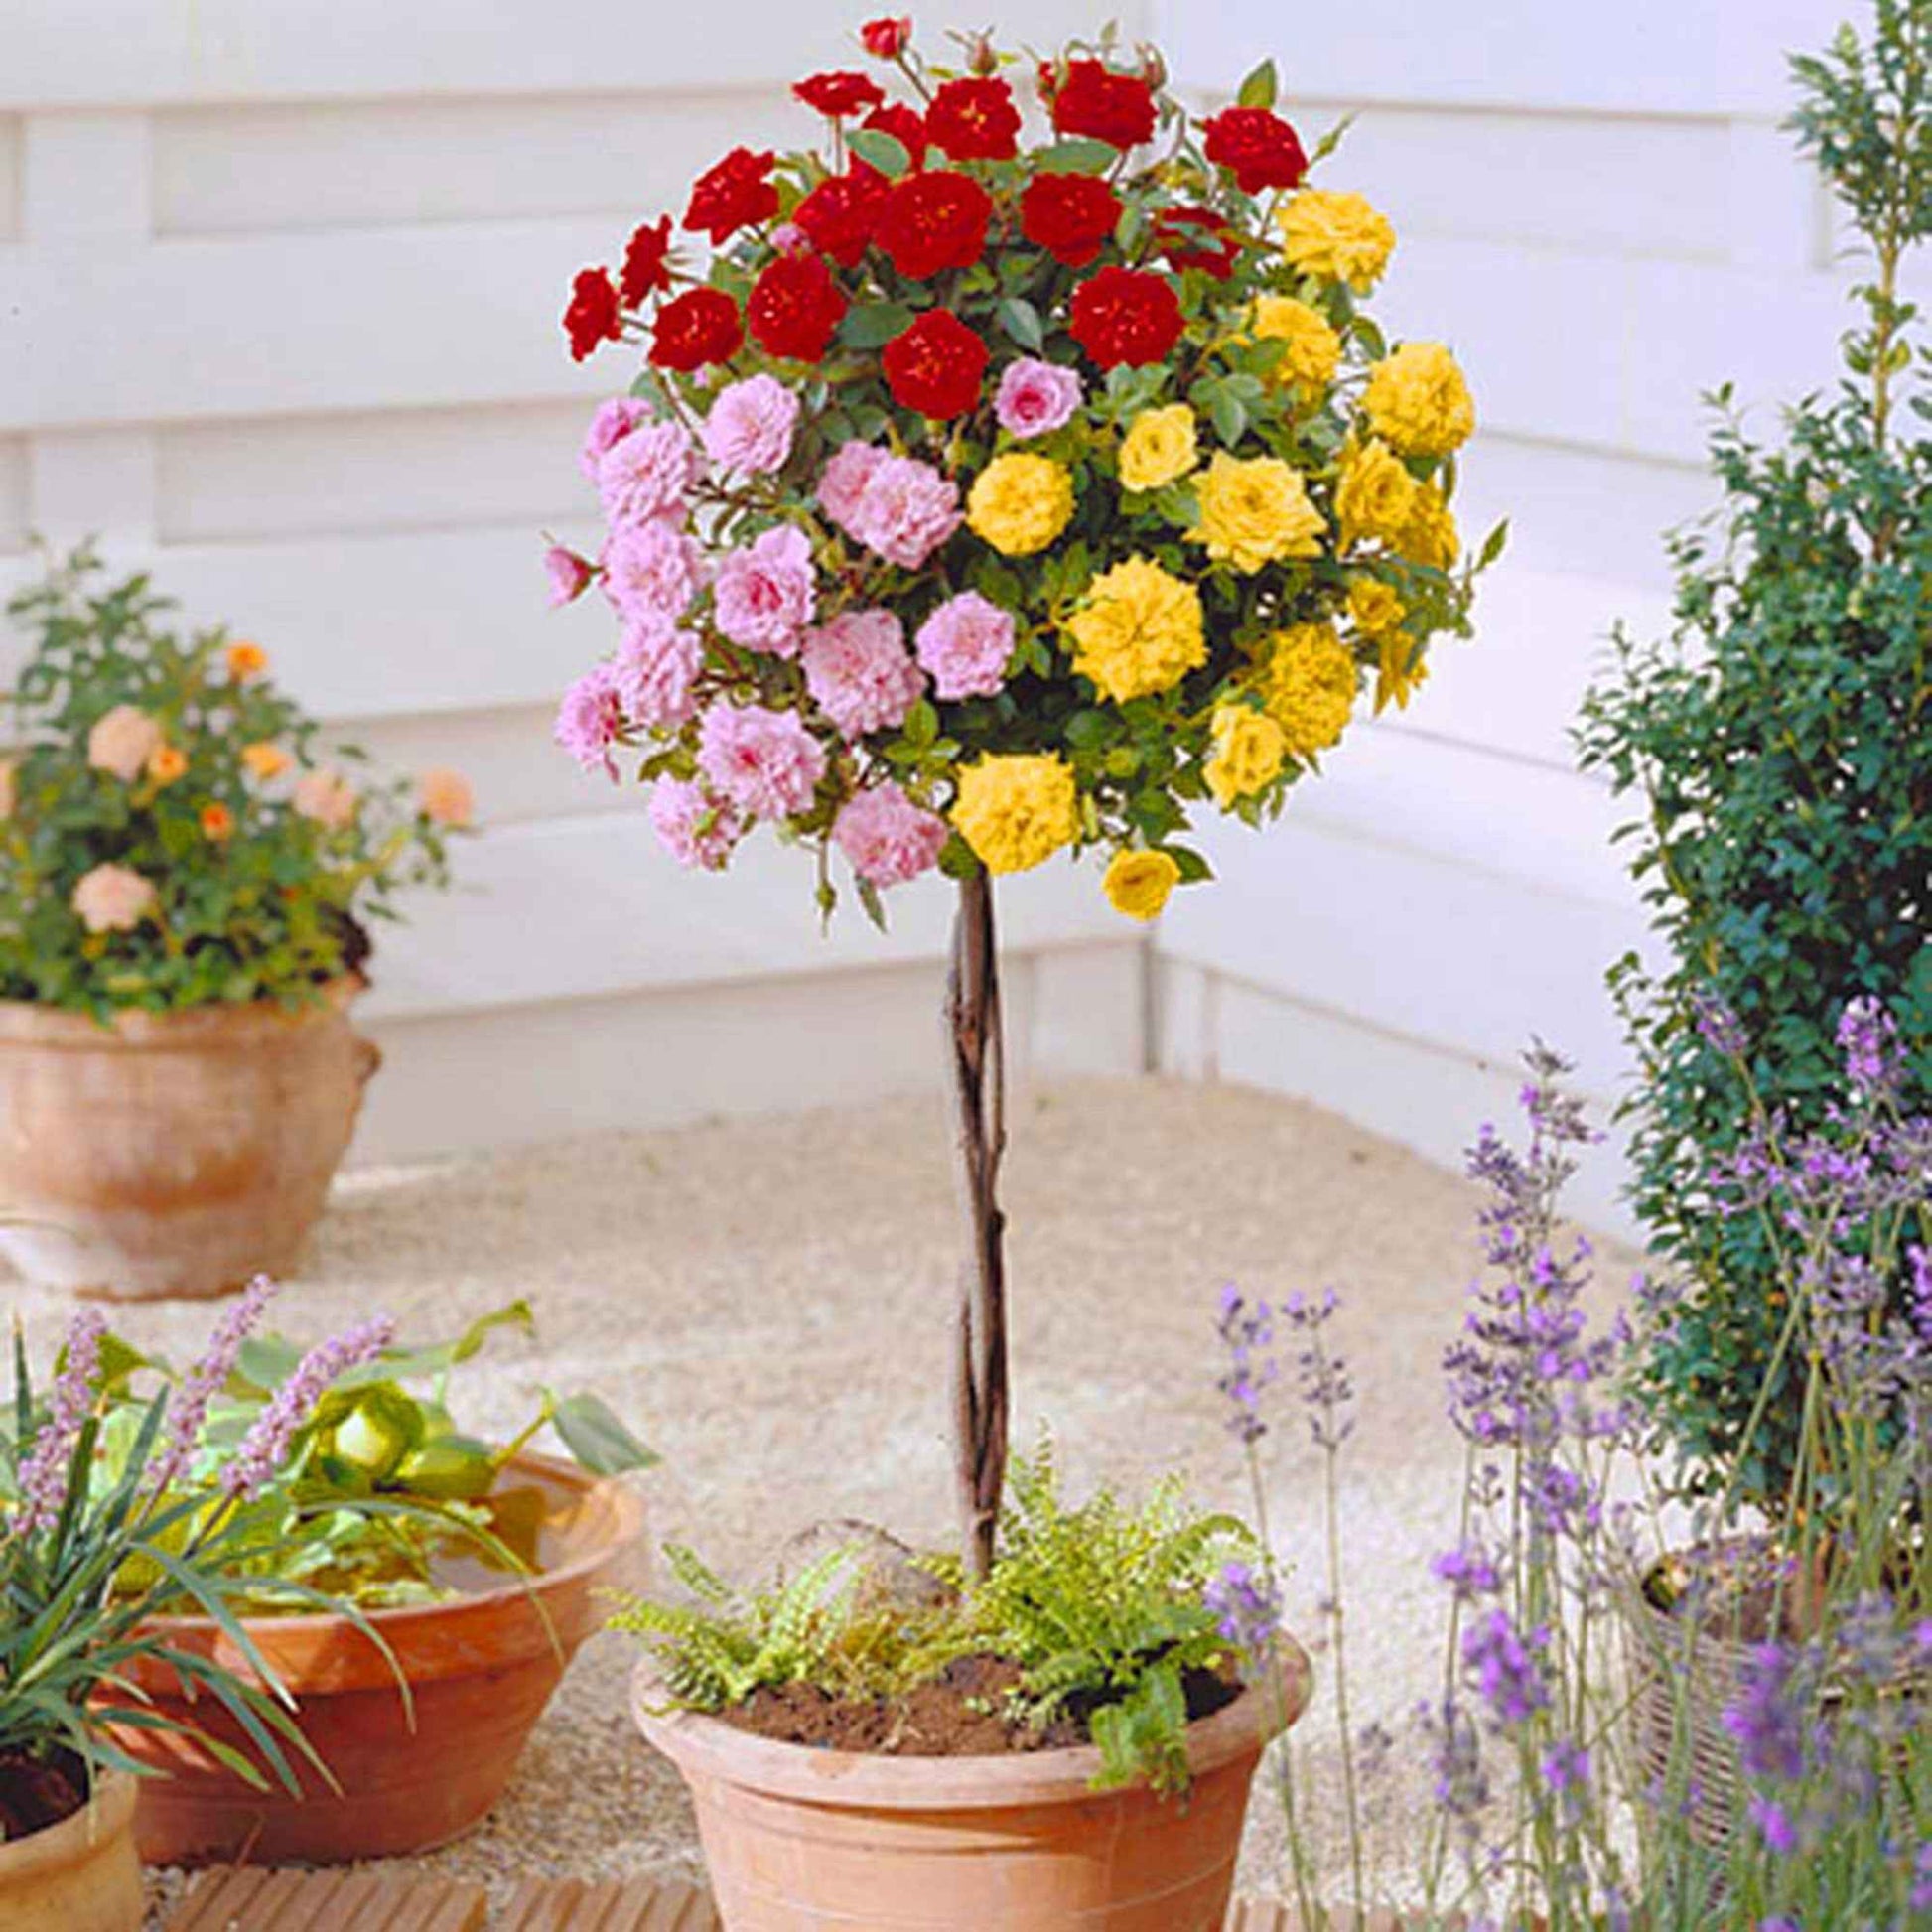 Stammrose Rosa 'Tricolor' rot-rosa-gelb - Winterhart  - Wurzelnackte Pflanzen - Gartenpflanzen